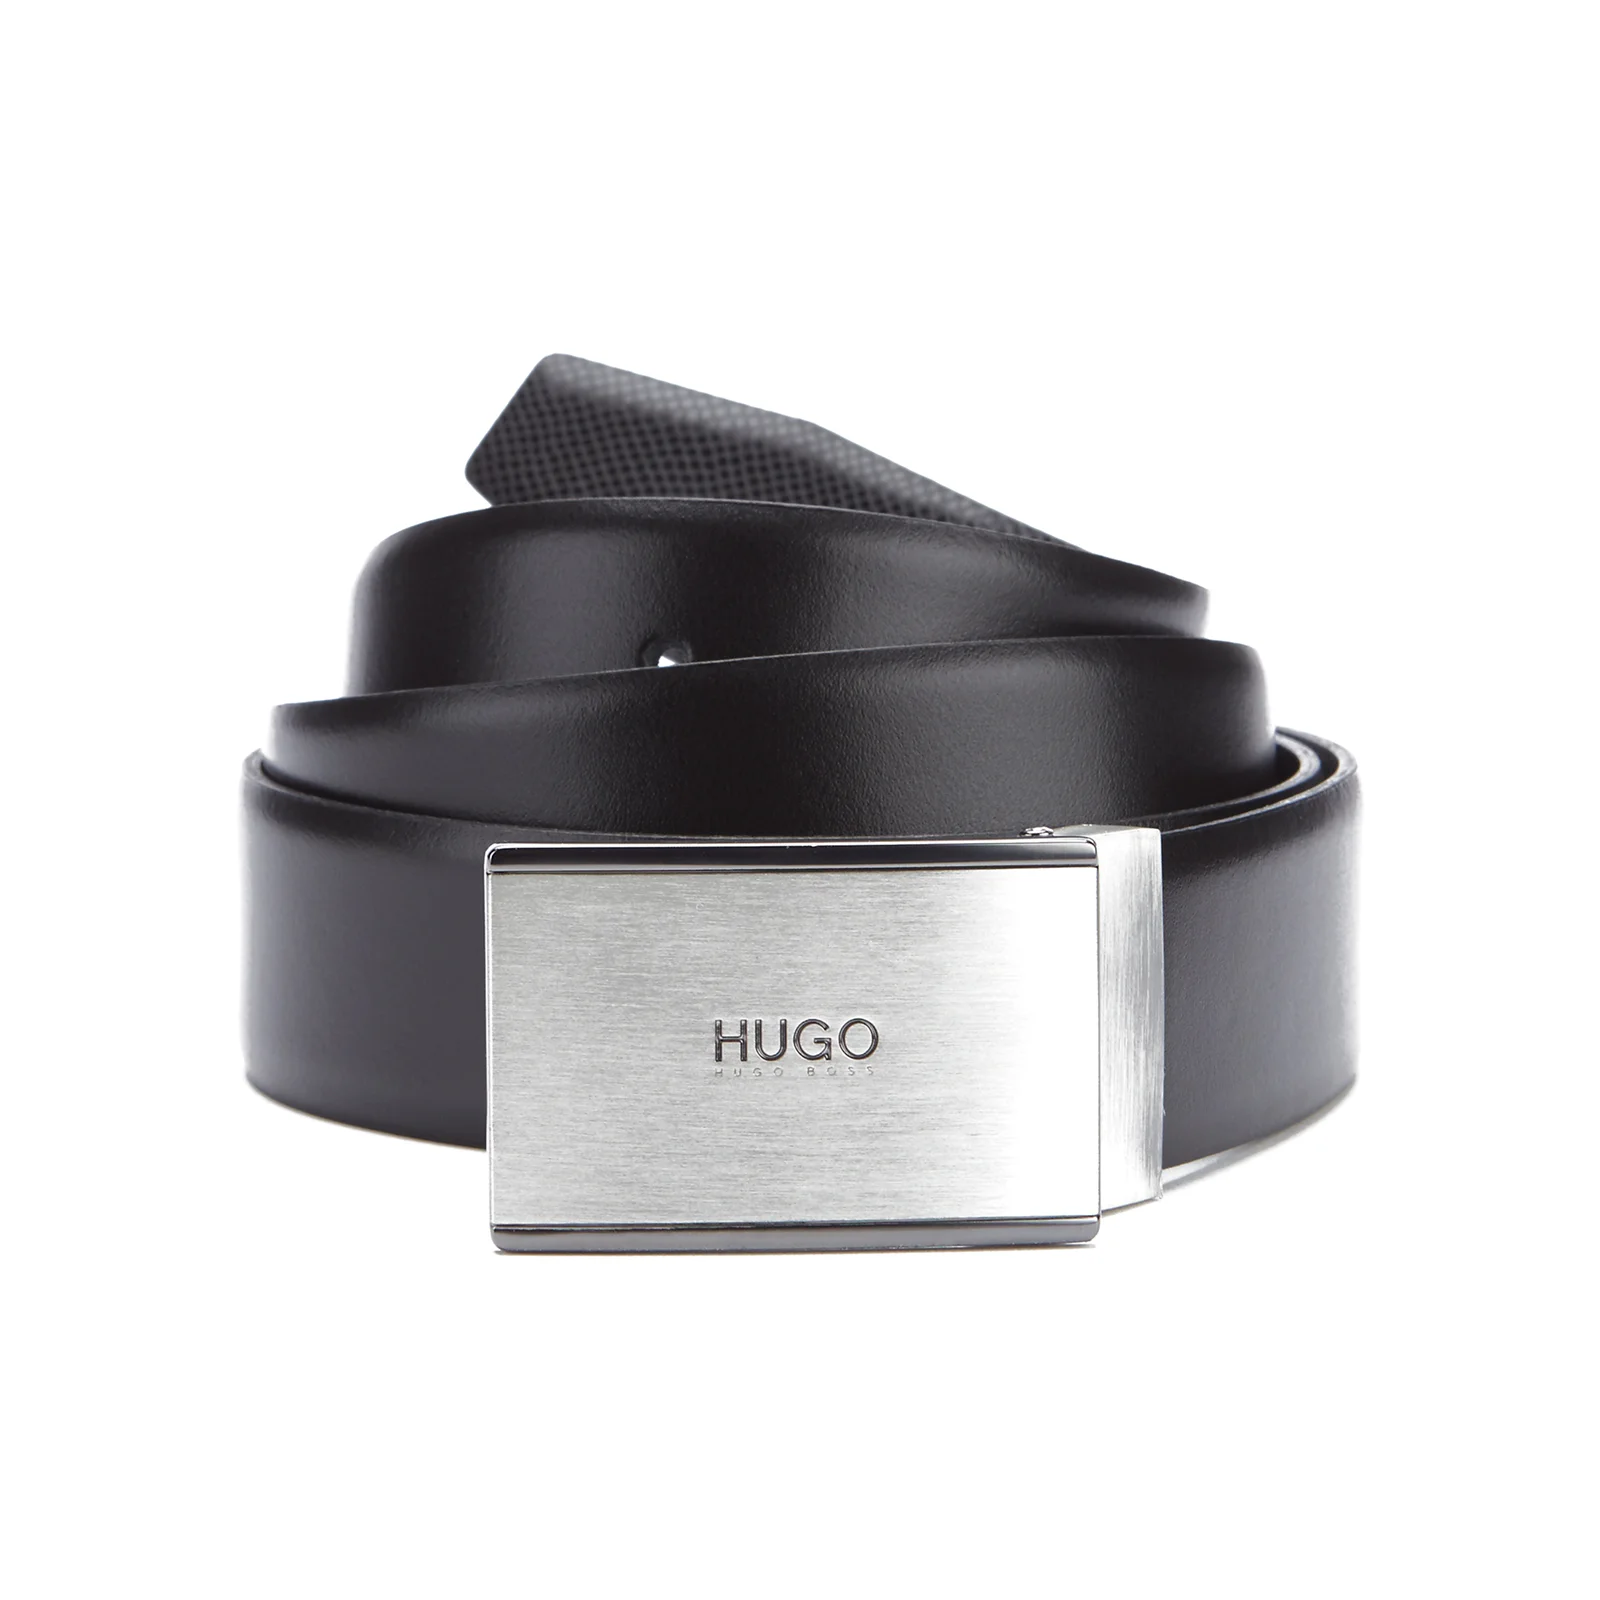 BOSS Hugo Boss C Gadiel Belt - Black Image 1